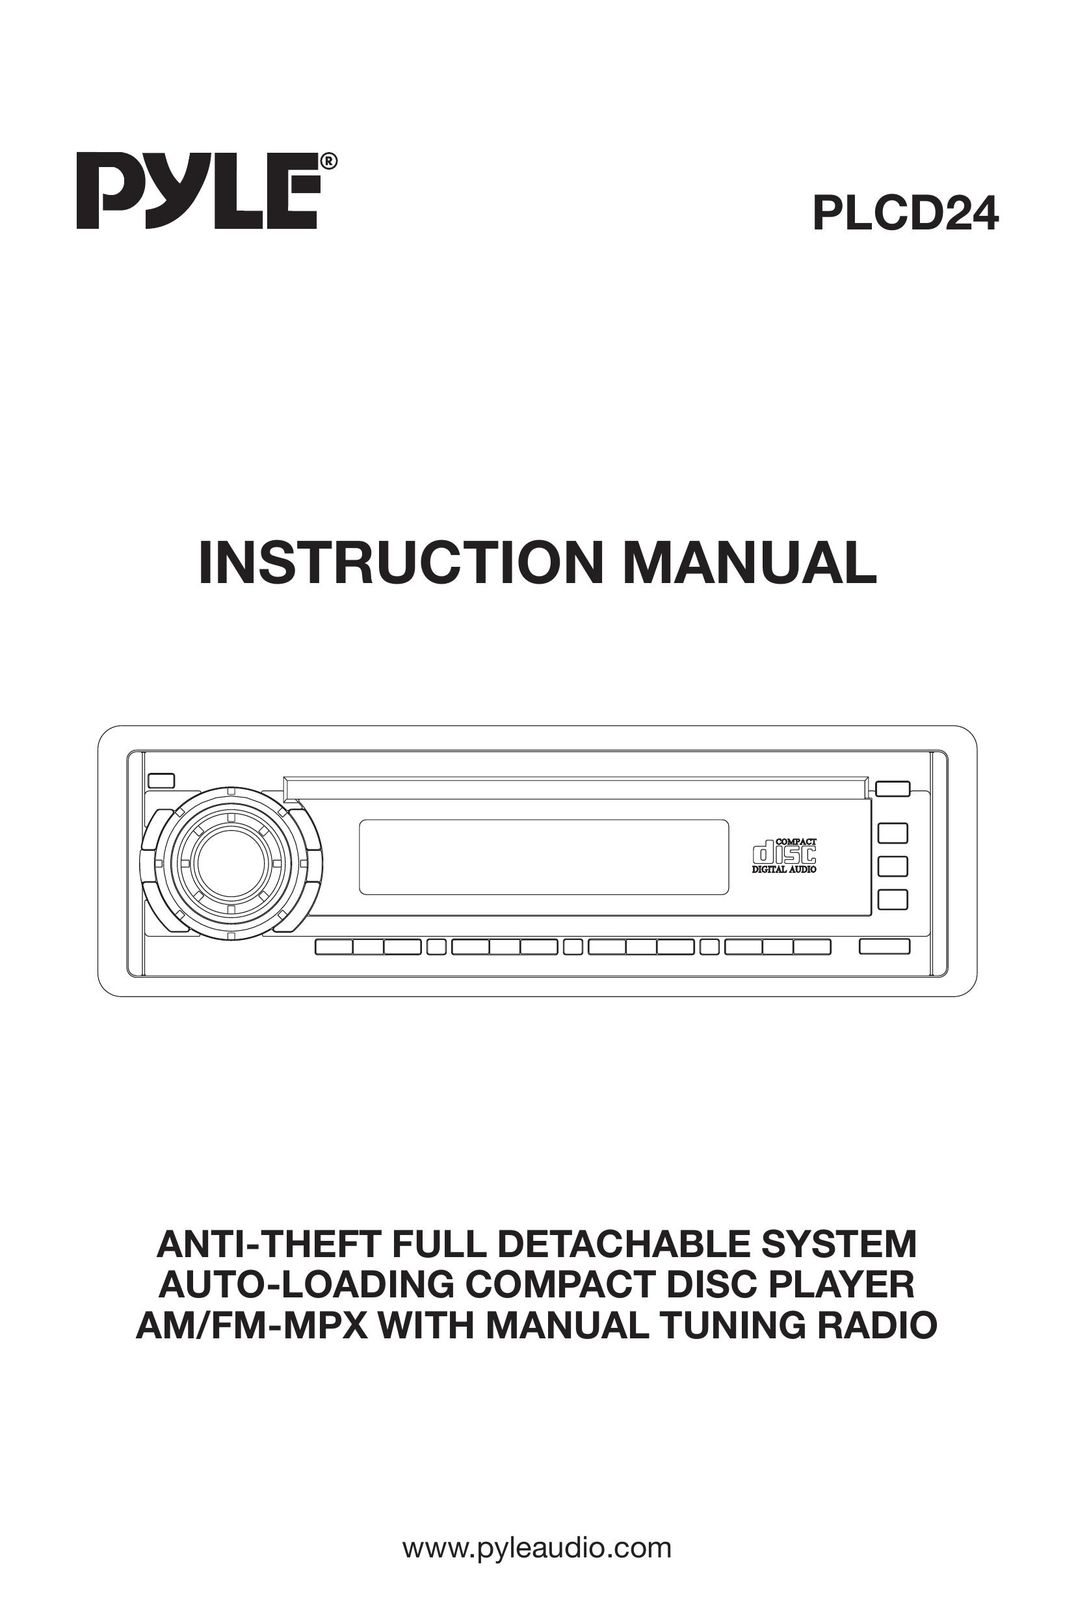 PYLE Audio PLCD24 Car Stereo System User Manual